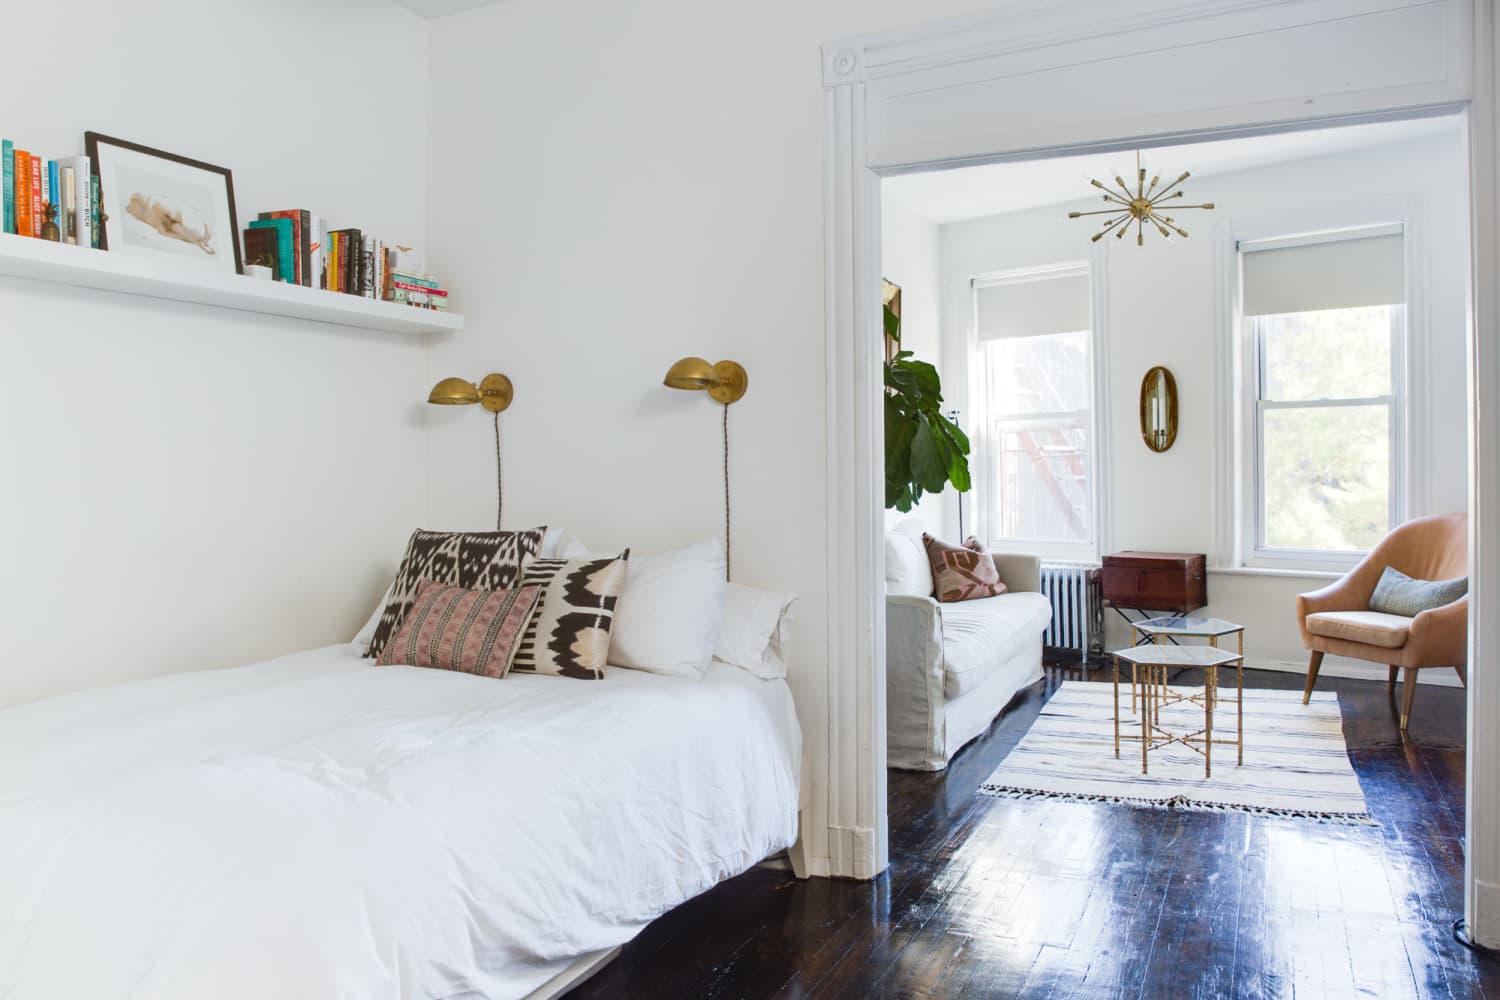 Wall Mounted Shelf Colored Wood House Shape Decor for Living Room Bedroom 